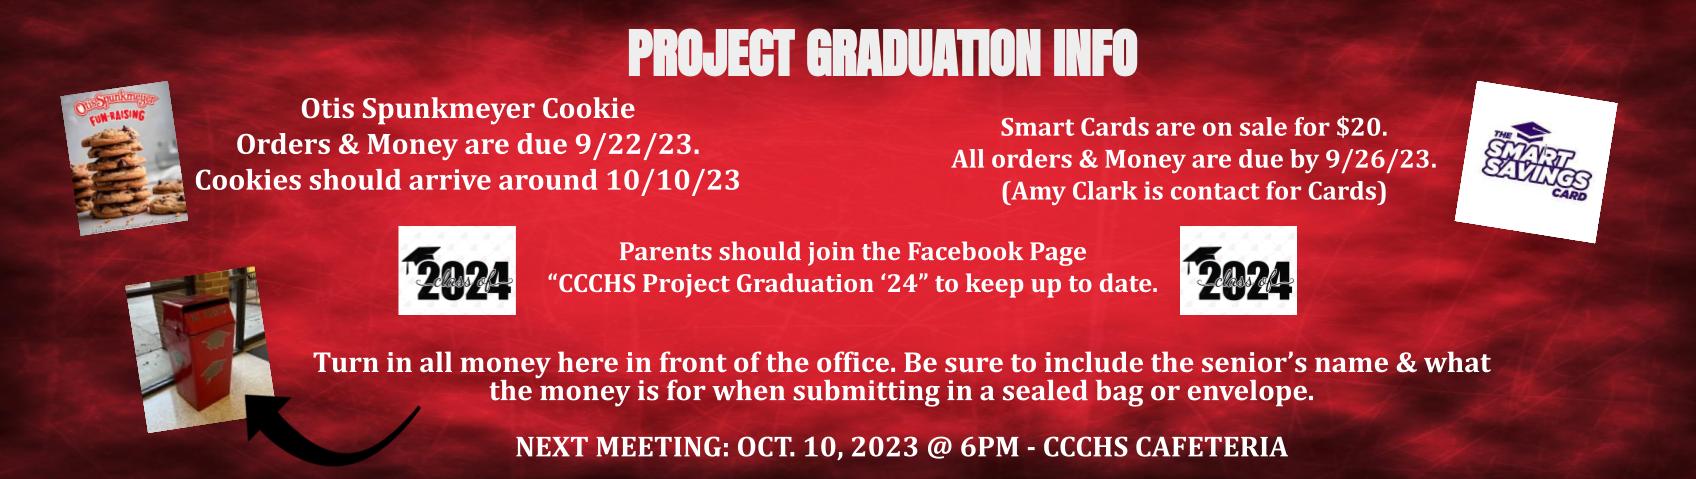 Project Graduation Info